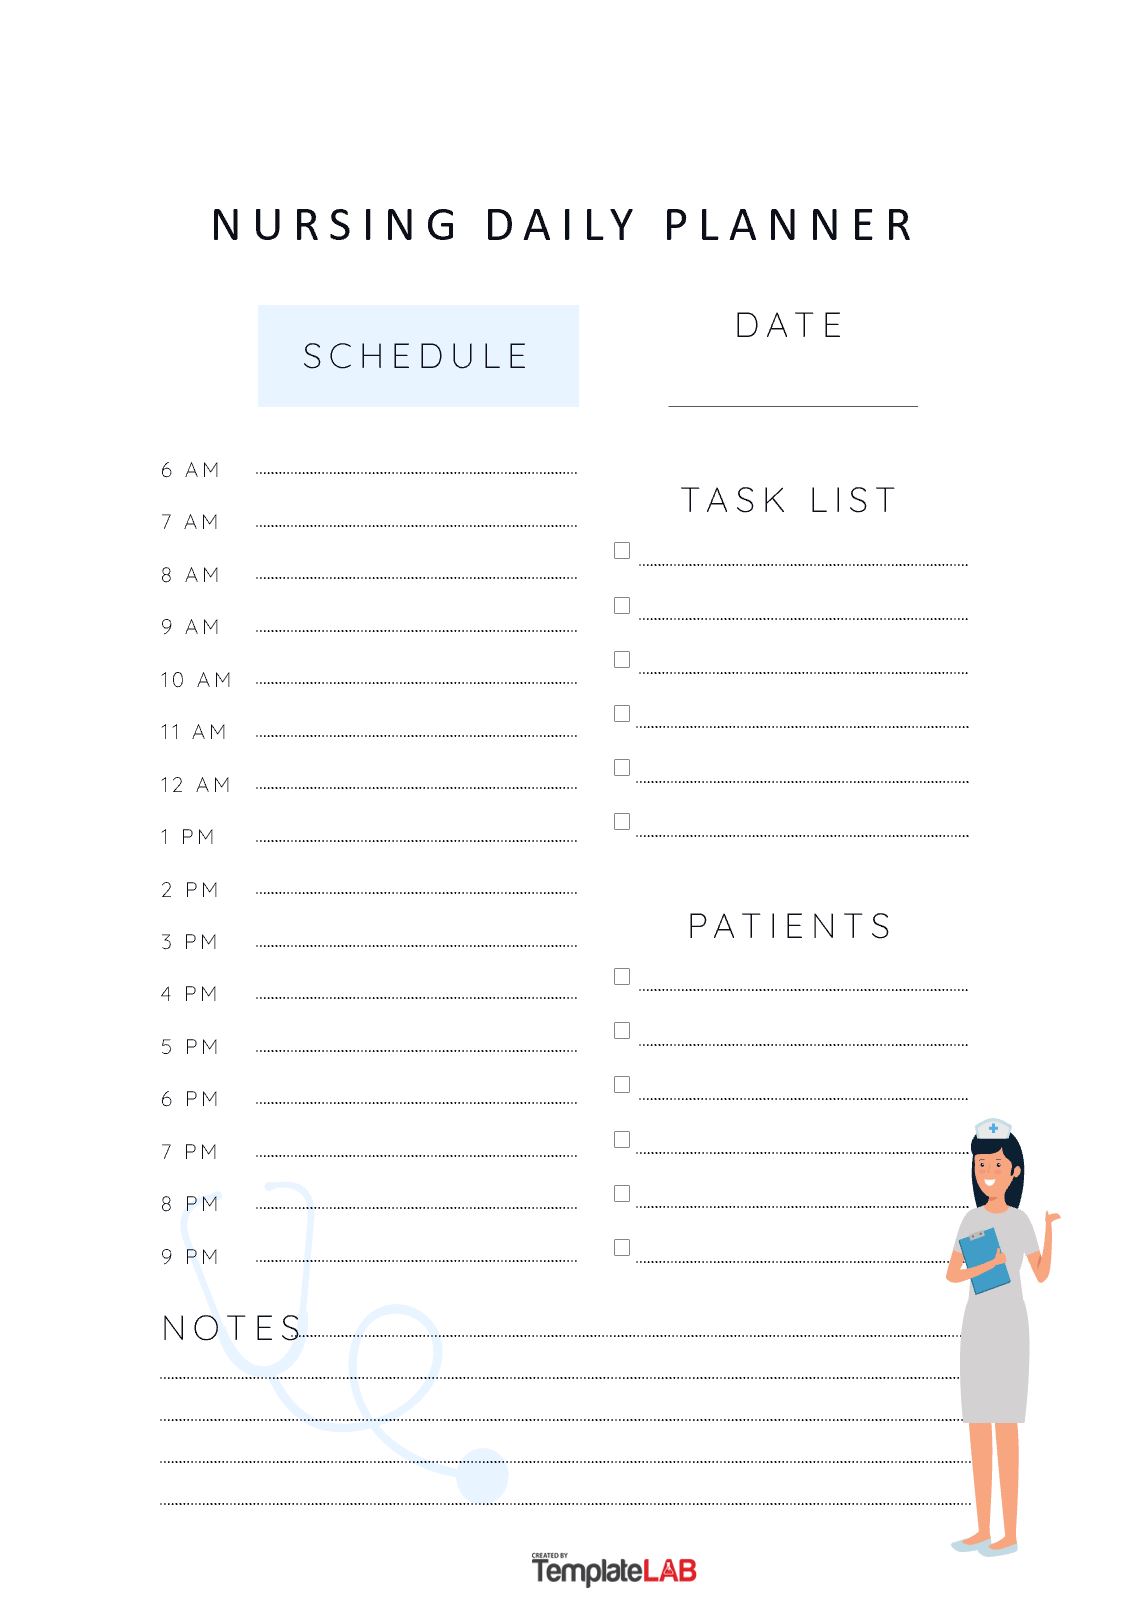 Free Nursing Daily Planner